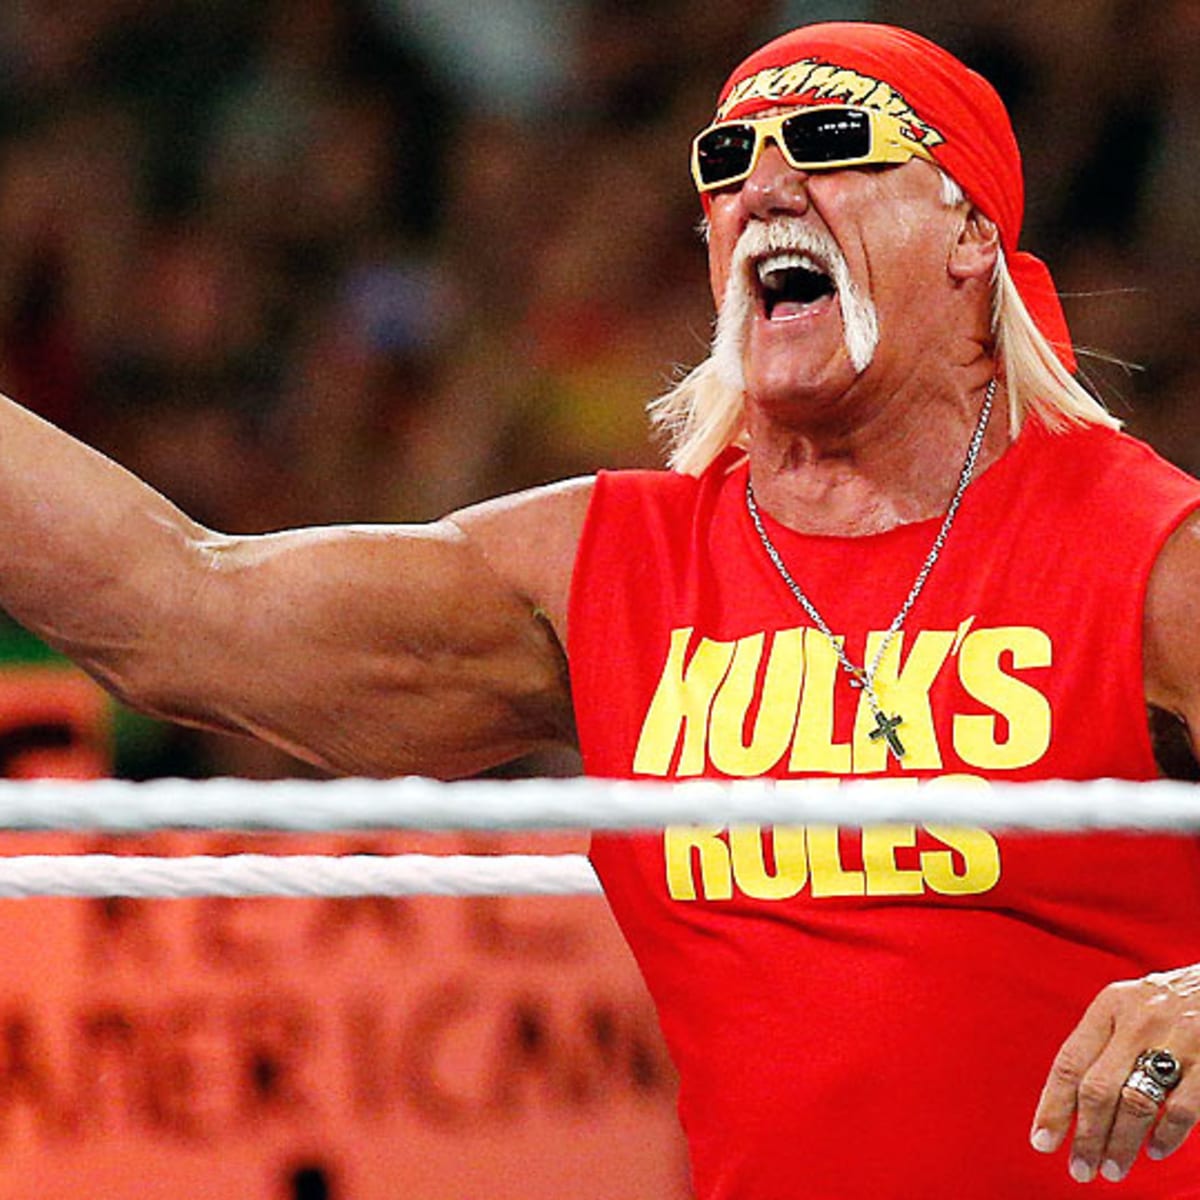 Hulk Hogan sex tape Can he win $100M lawsuit vs Gawker?